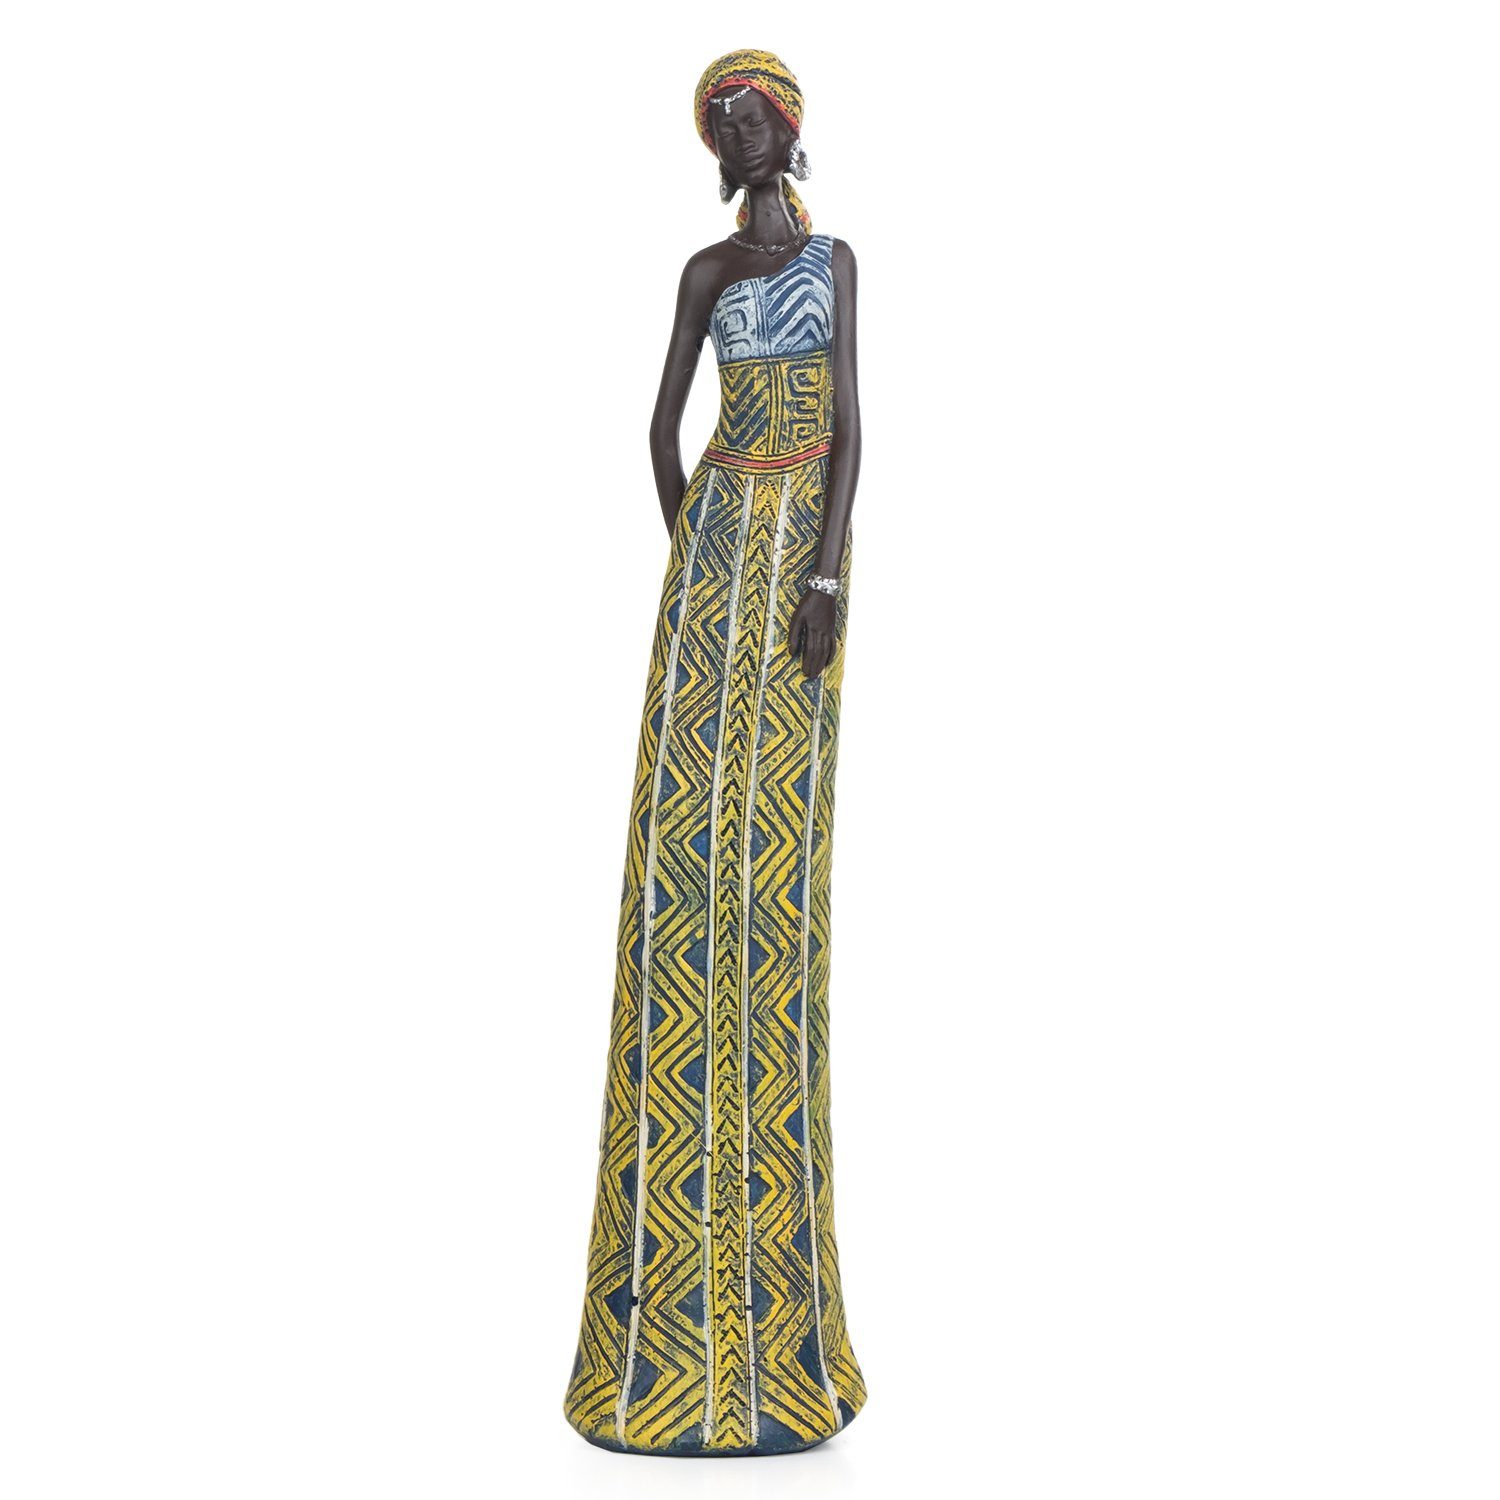 Moritz Dekofigur Deko-Figur Afrikanische Frauen Kunstfigur kulturell gelb aus Polyresin, Dekofigur aus Polyresin Dekoelement Dekoration Figuren